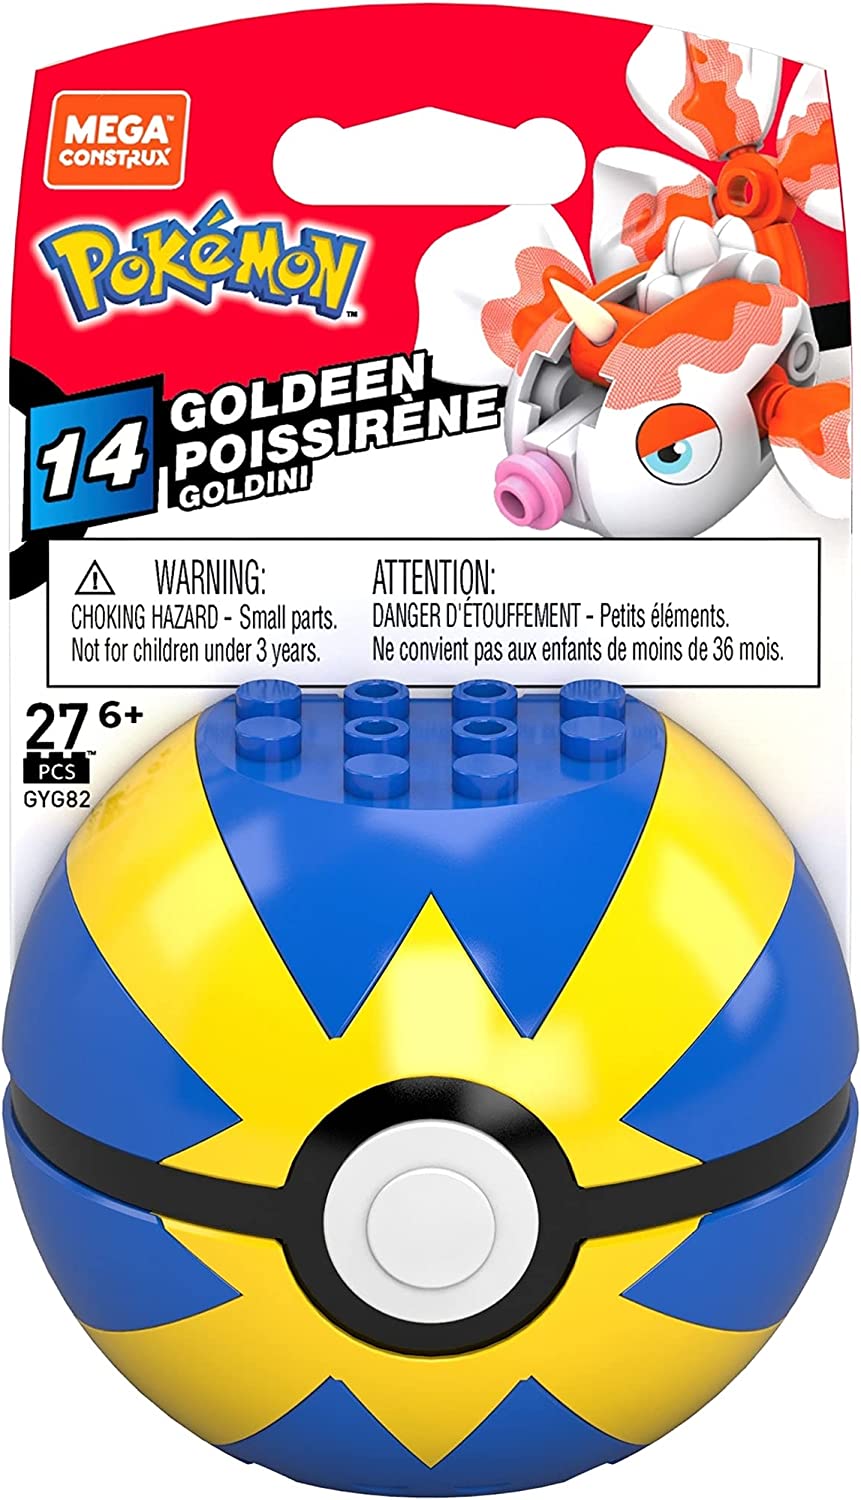 Mega Construx Pokemon Goldeen Poke Ball Building Set